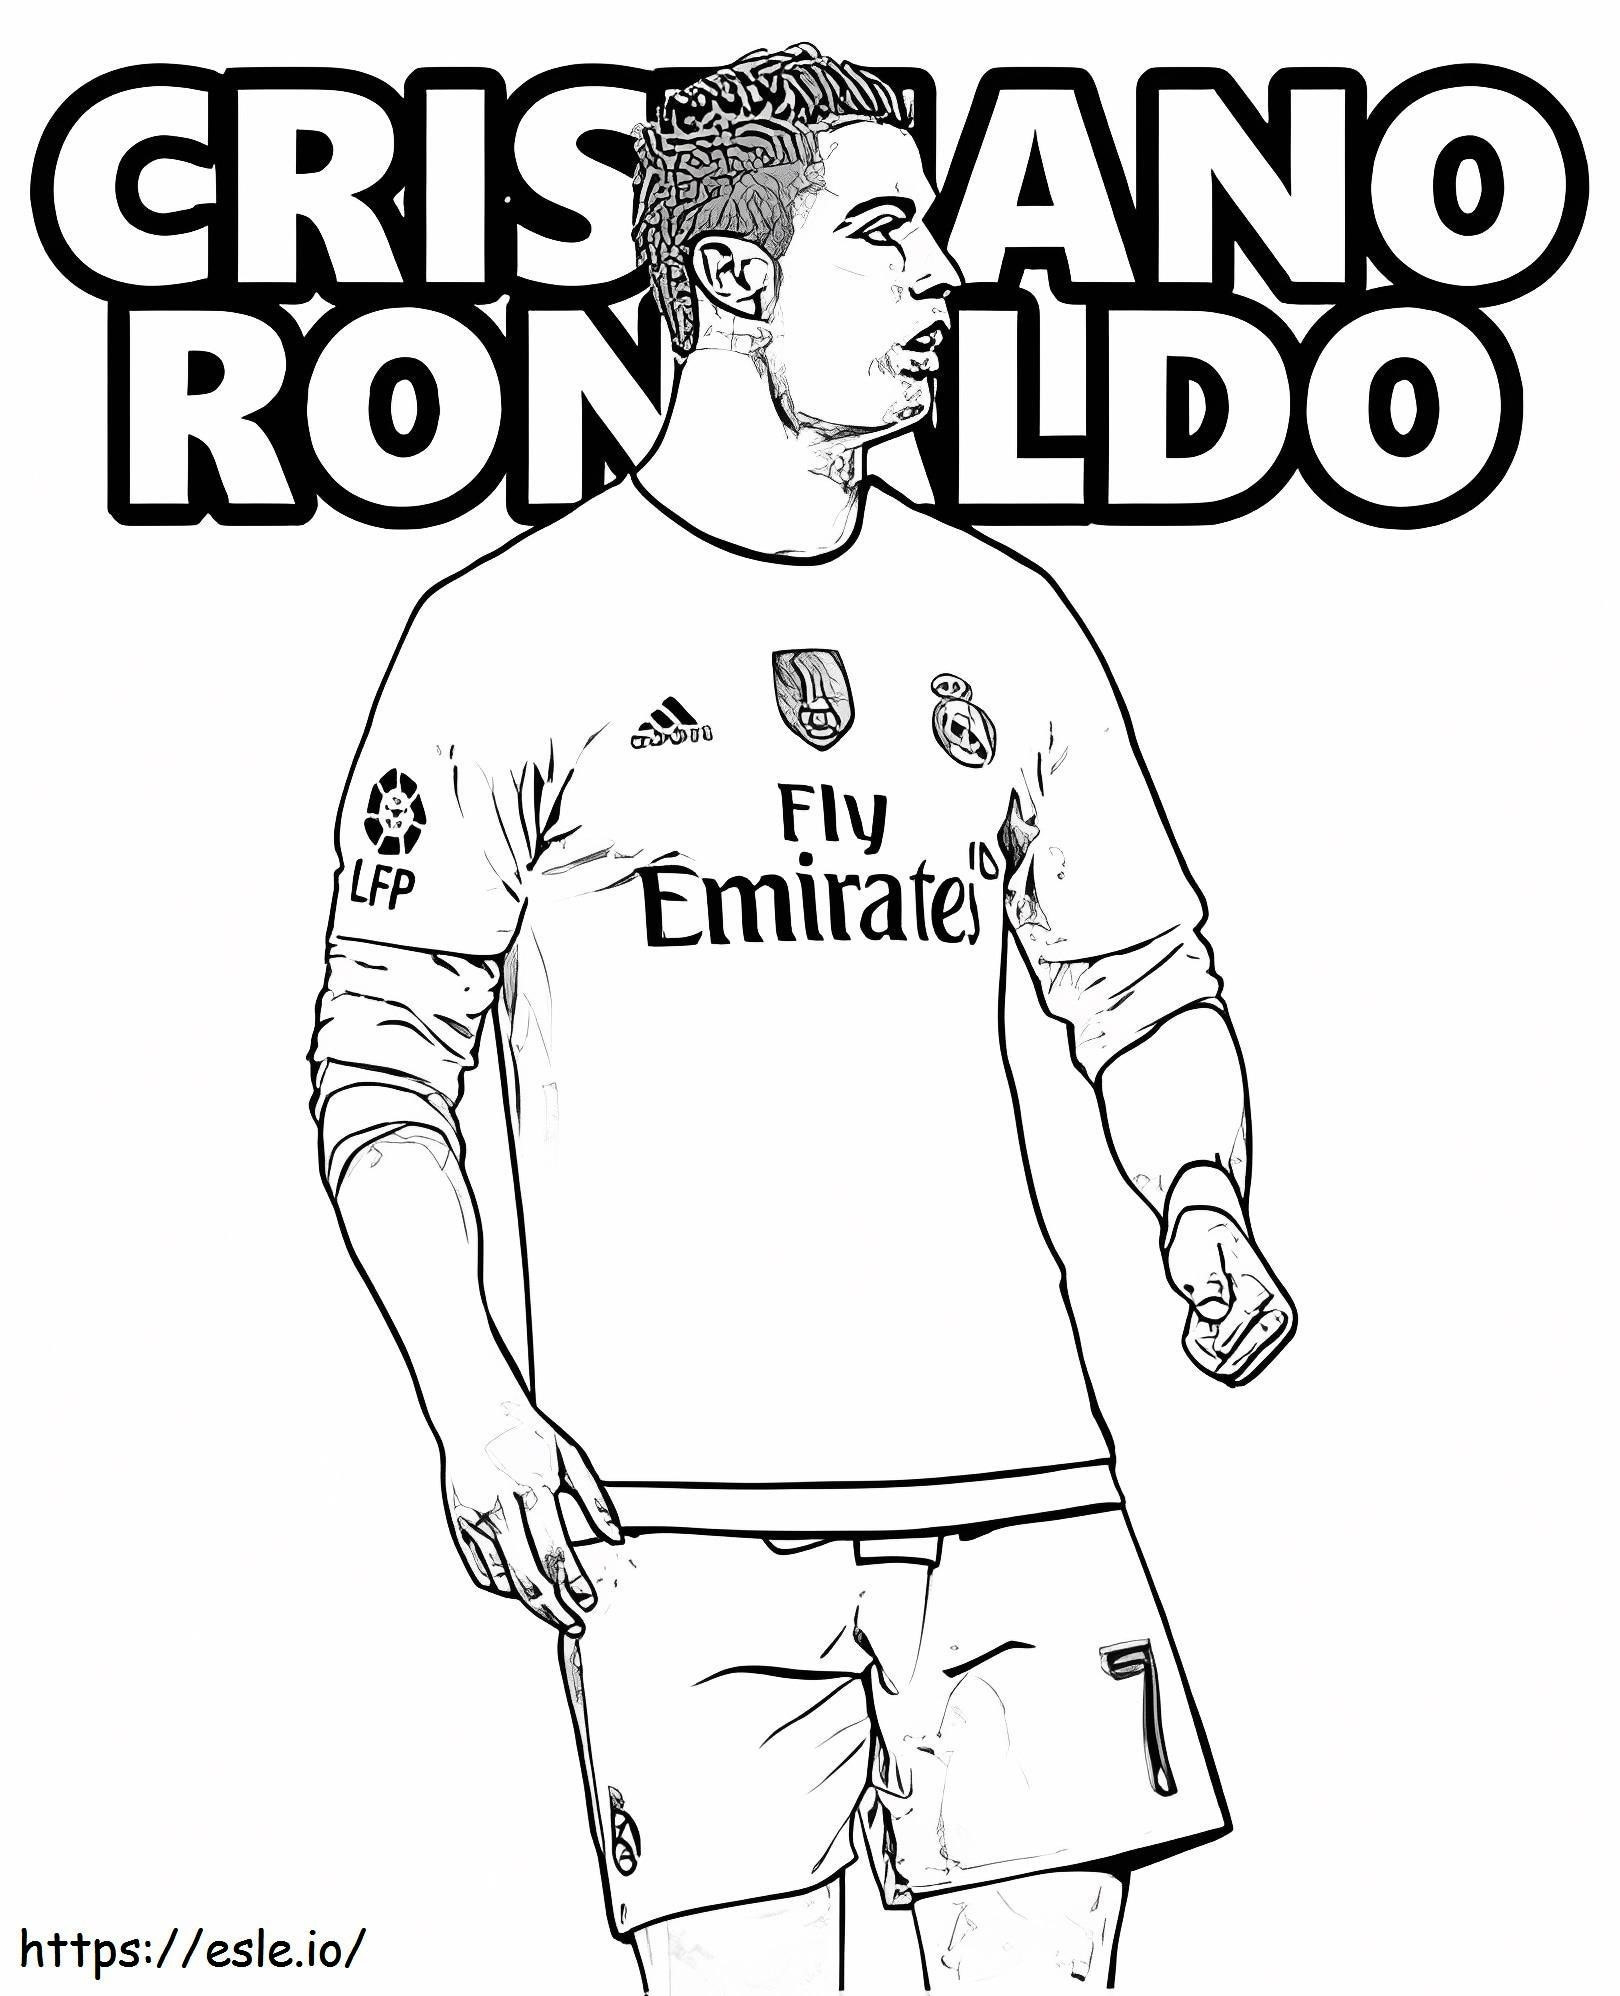 Genial Cristiano Ronaldo para colorir